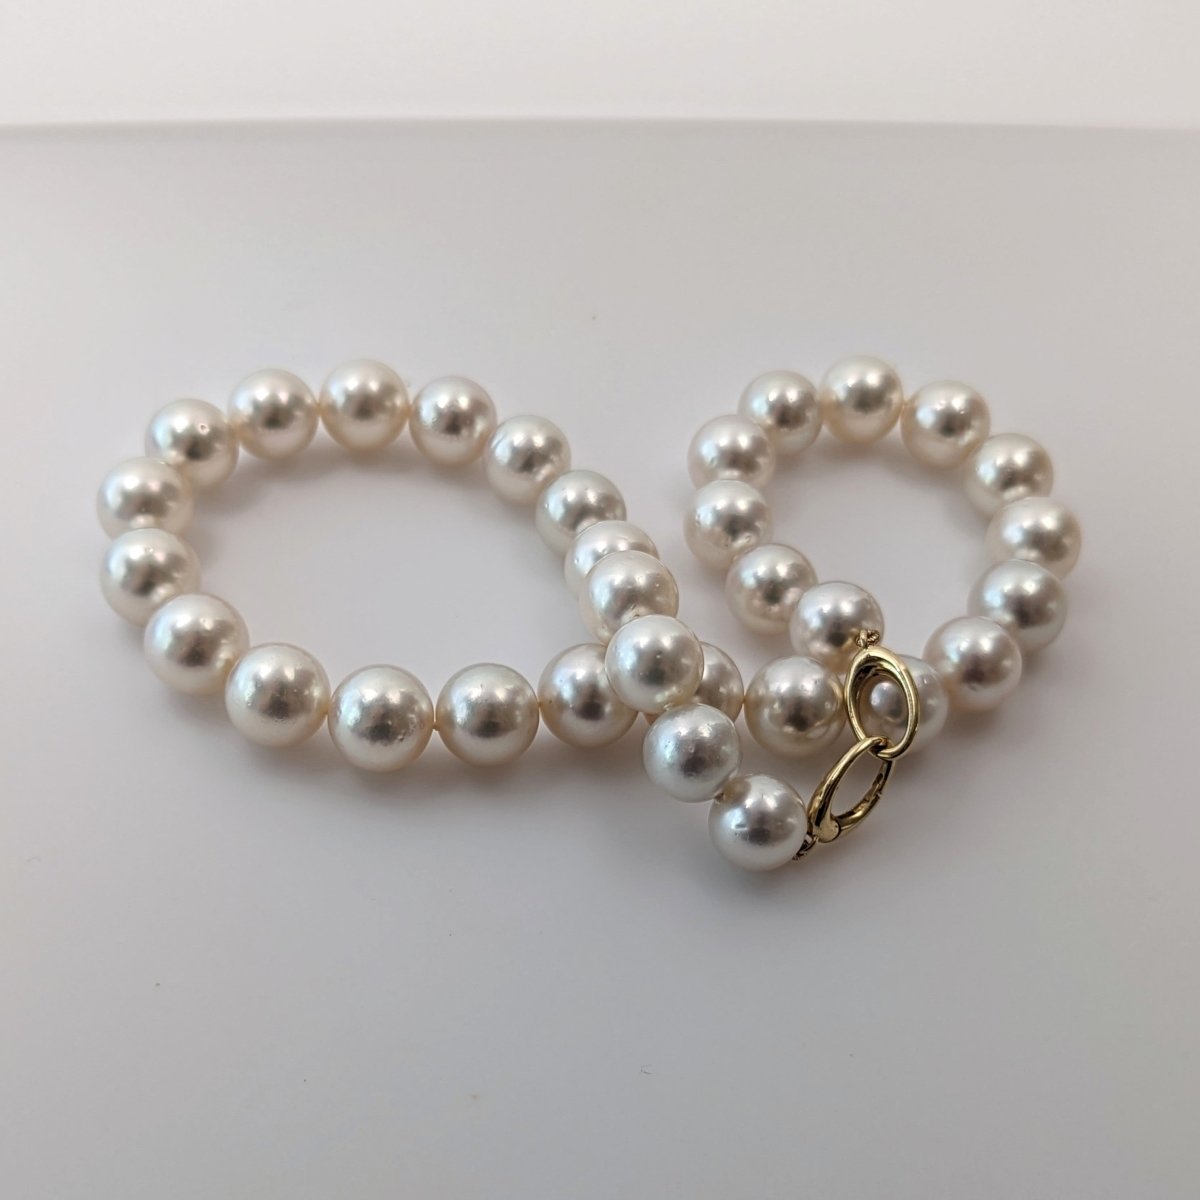 11-13mm White South Sea Pearl Necklace - Marina Korneev Fine Pearls